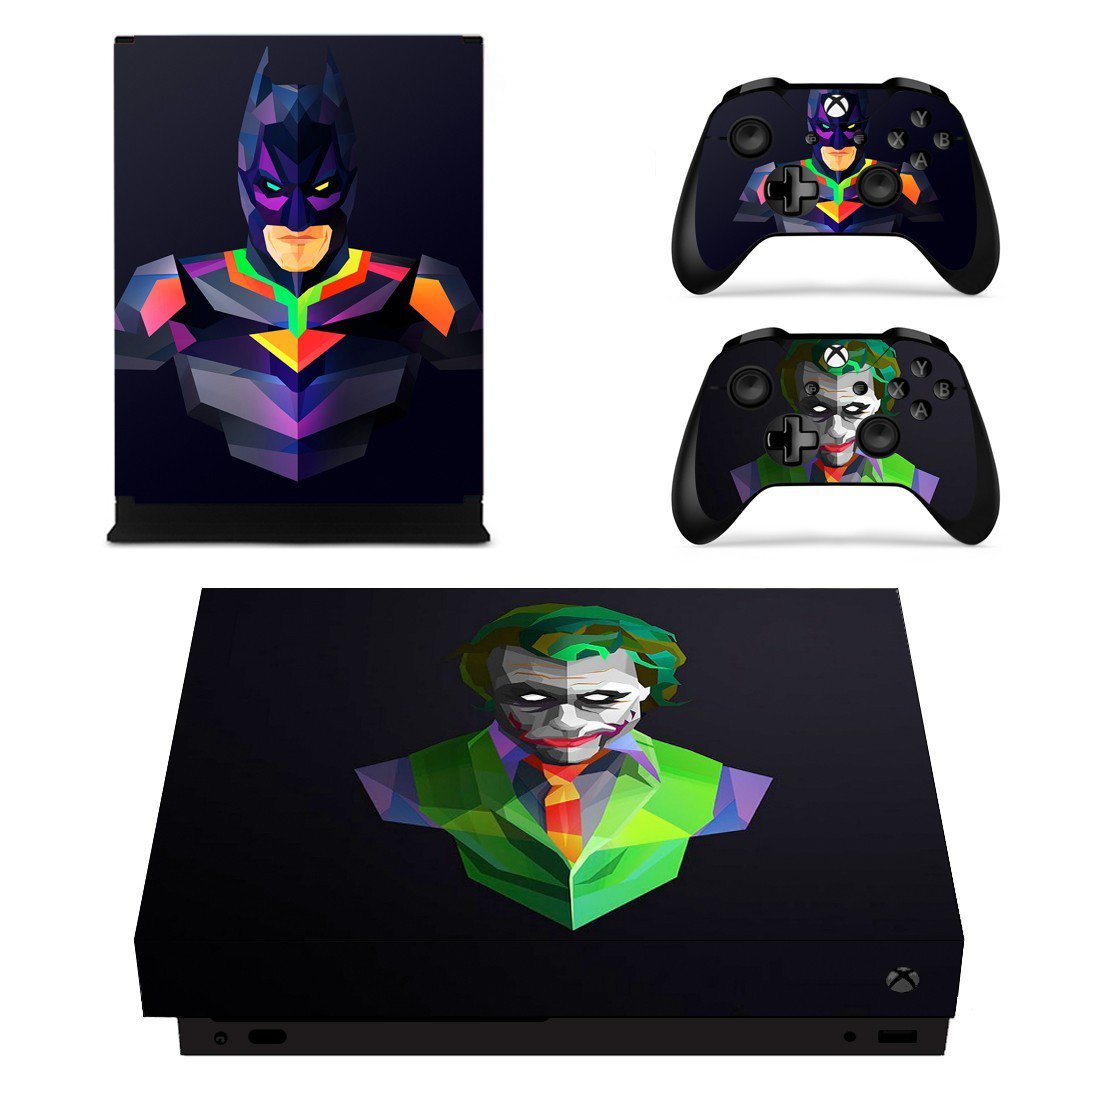 Batman xbox. Xbox one x Skin Joker. Наклейки на консоль Xbox 360. Стикеры для Xbox one x. Наклейки для Xbox one x.